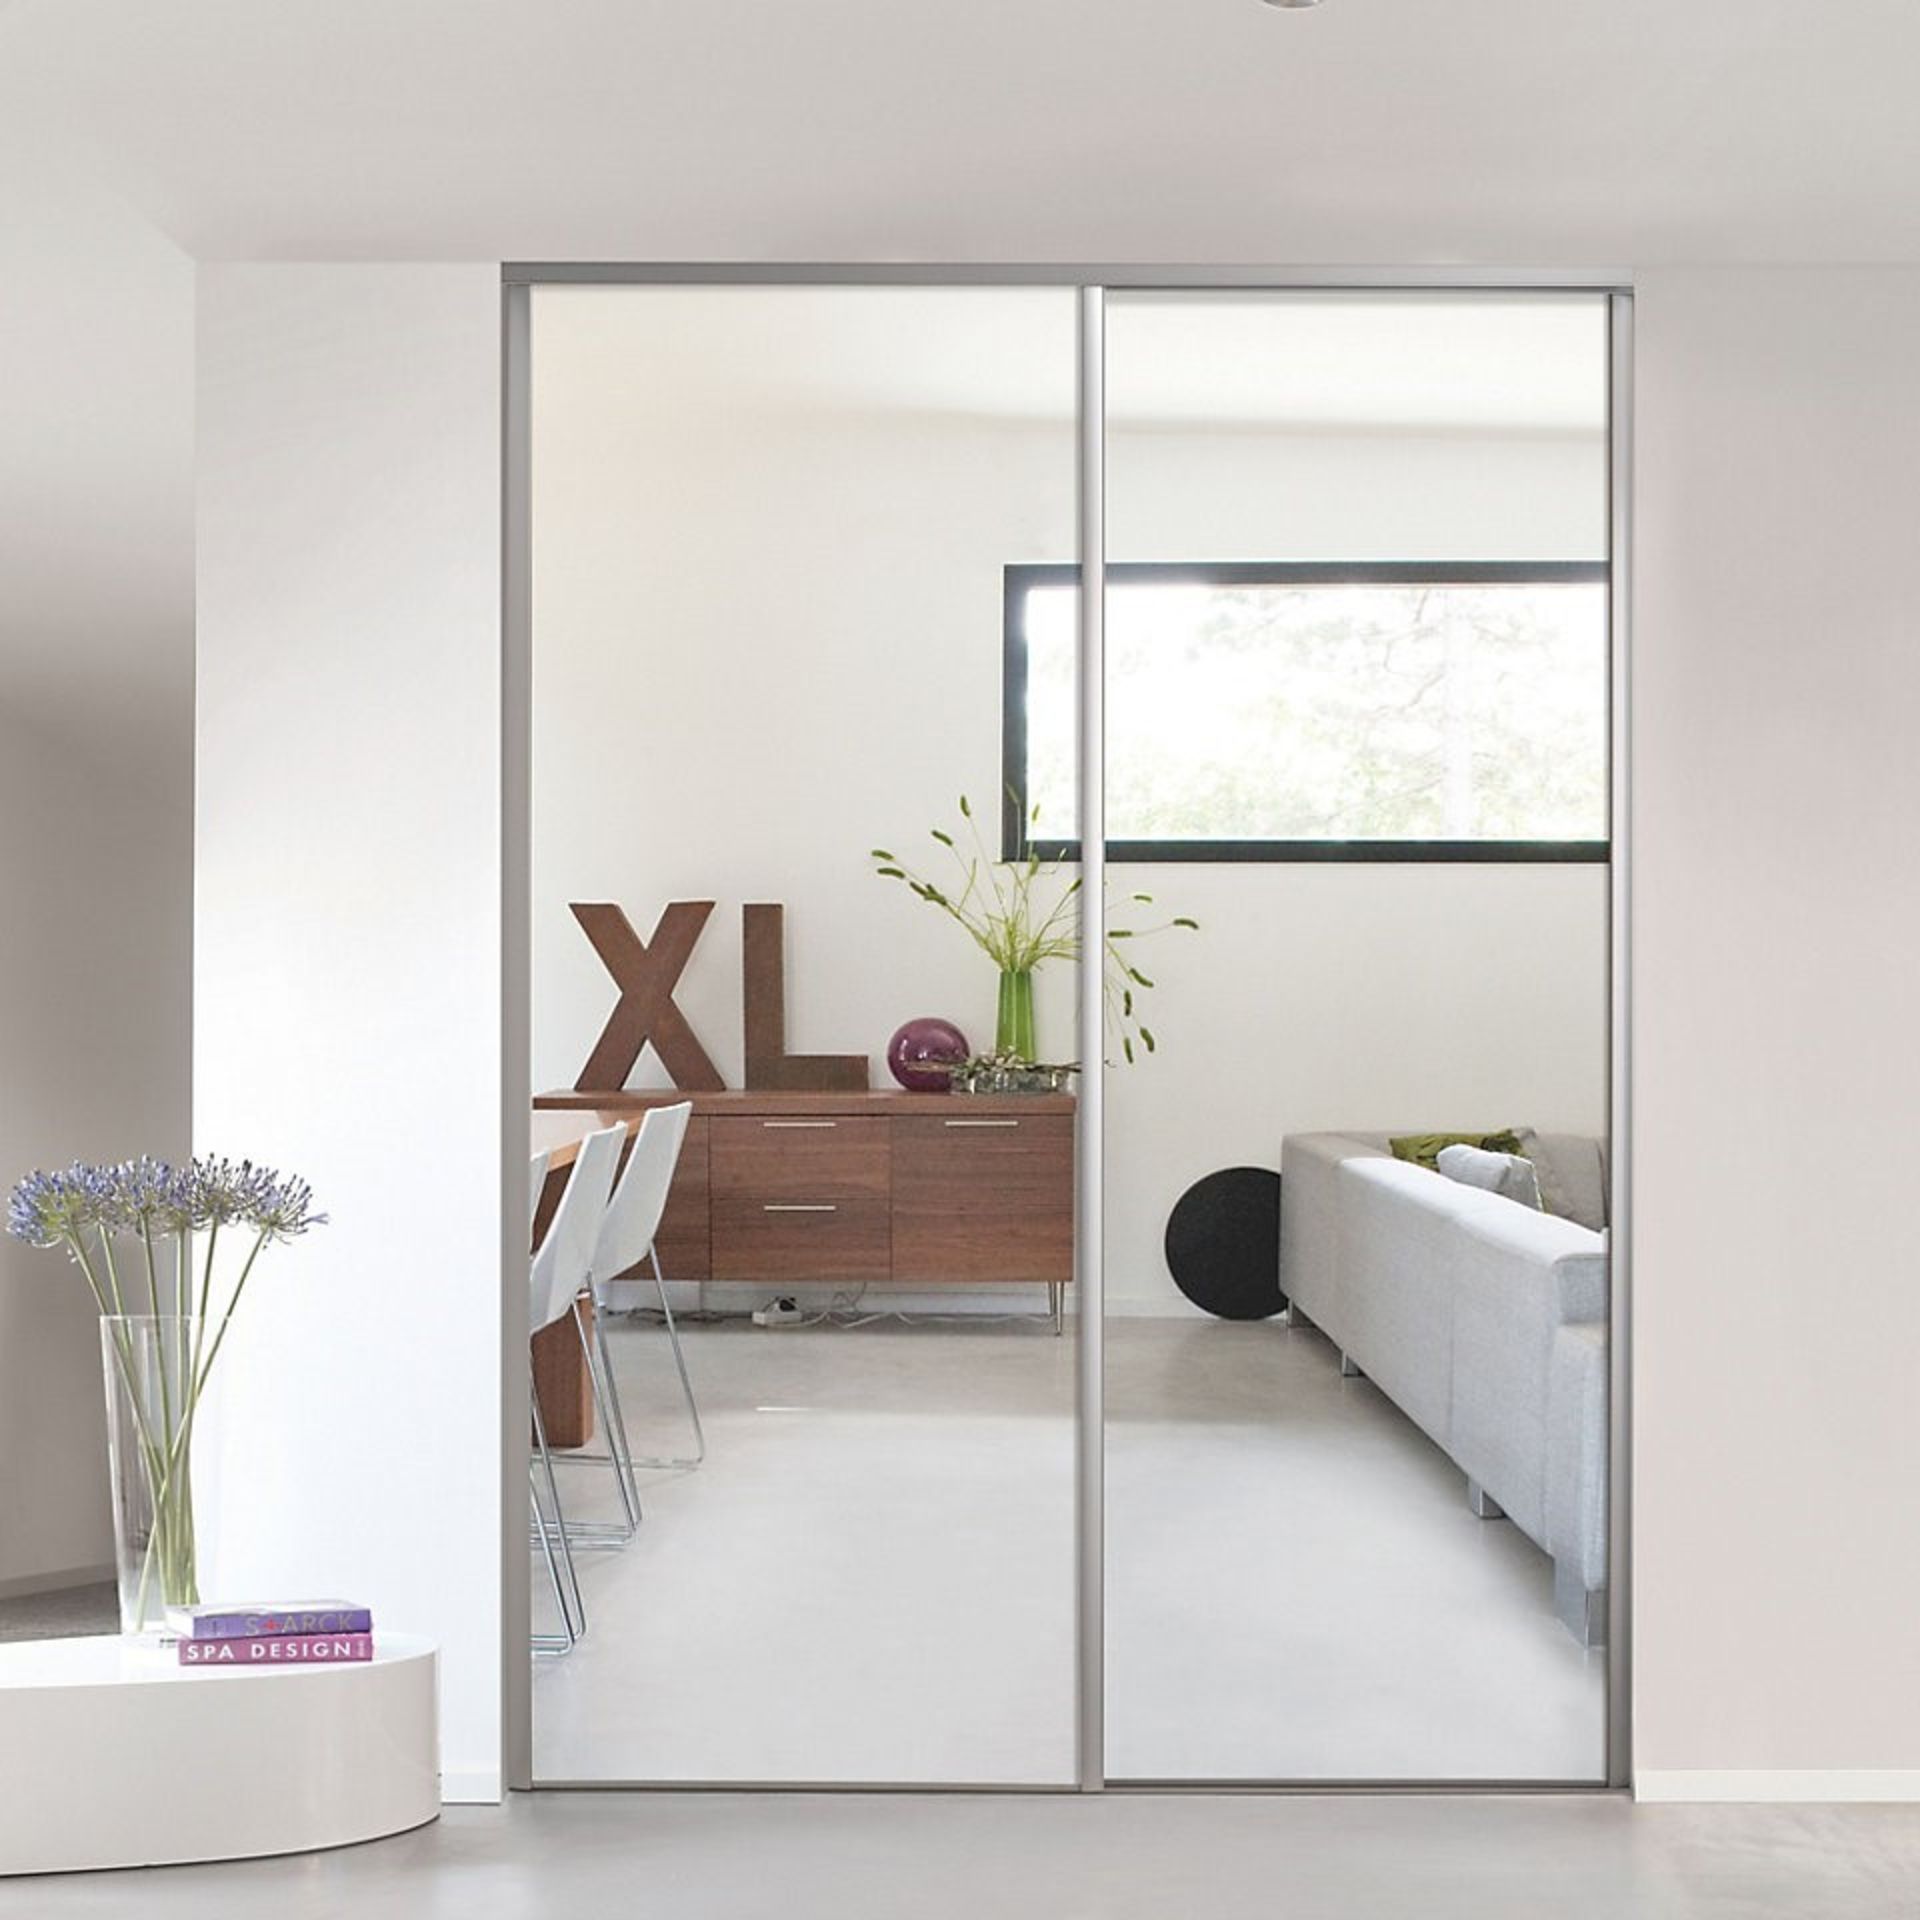 1 x VALLA 1 Sliding Wardrobe Door In Light Grey With A Silver Mirror With Grey Lacquered Steel Profi - Bild 2 aus 4